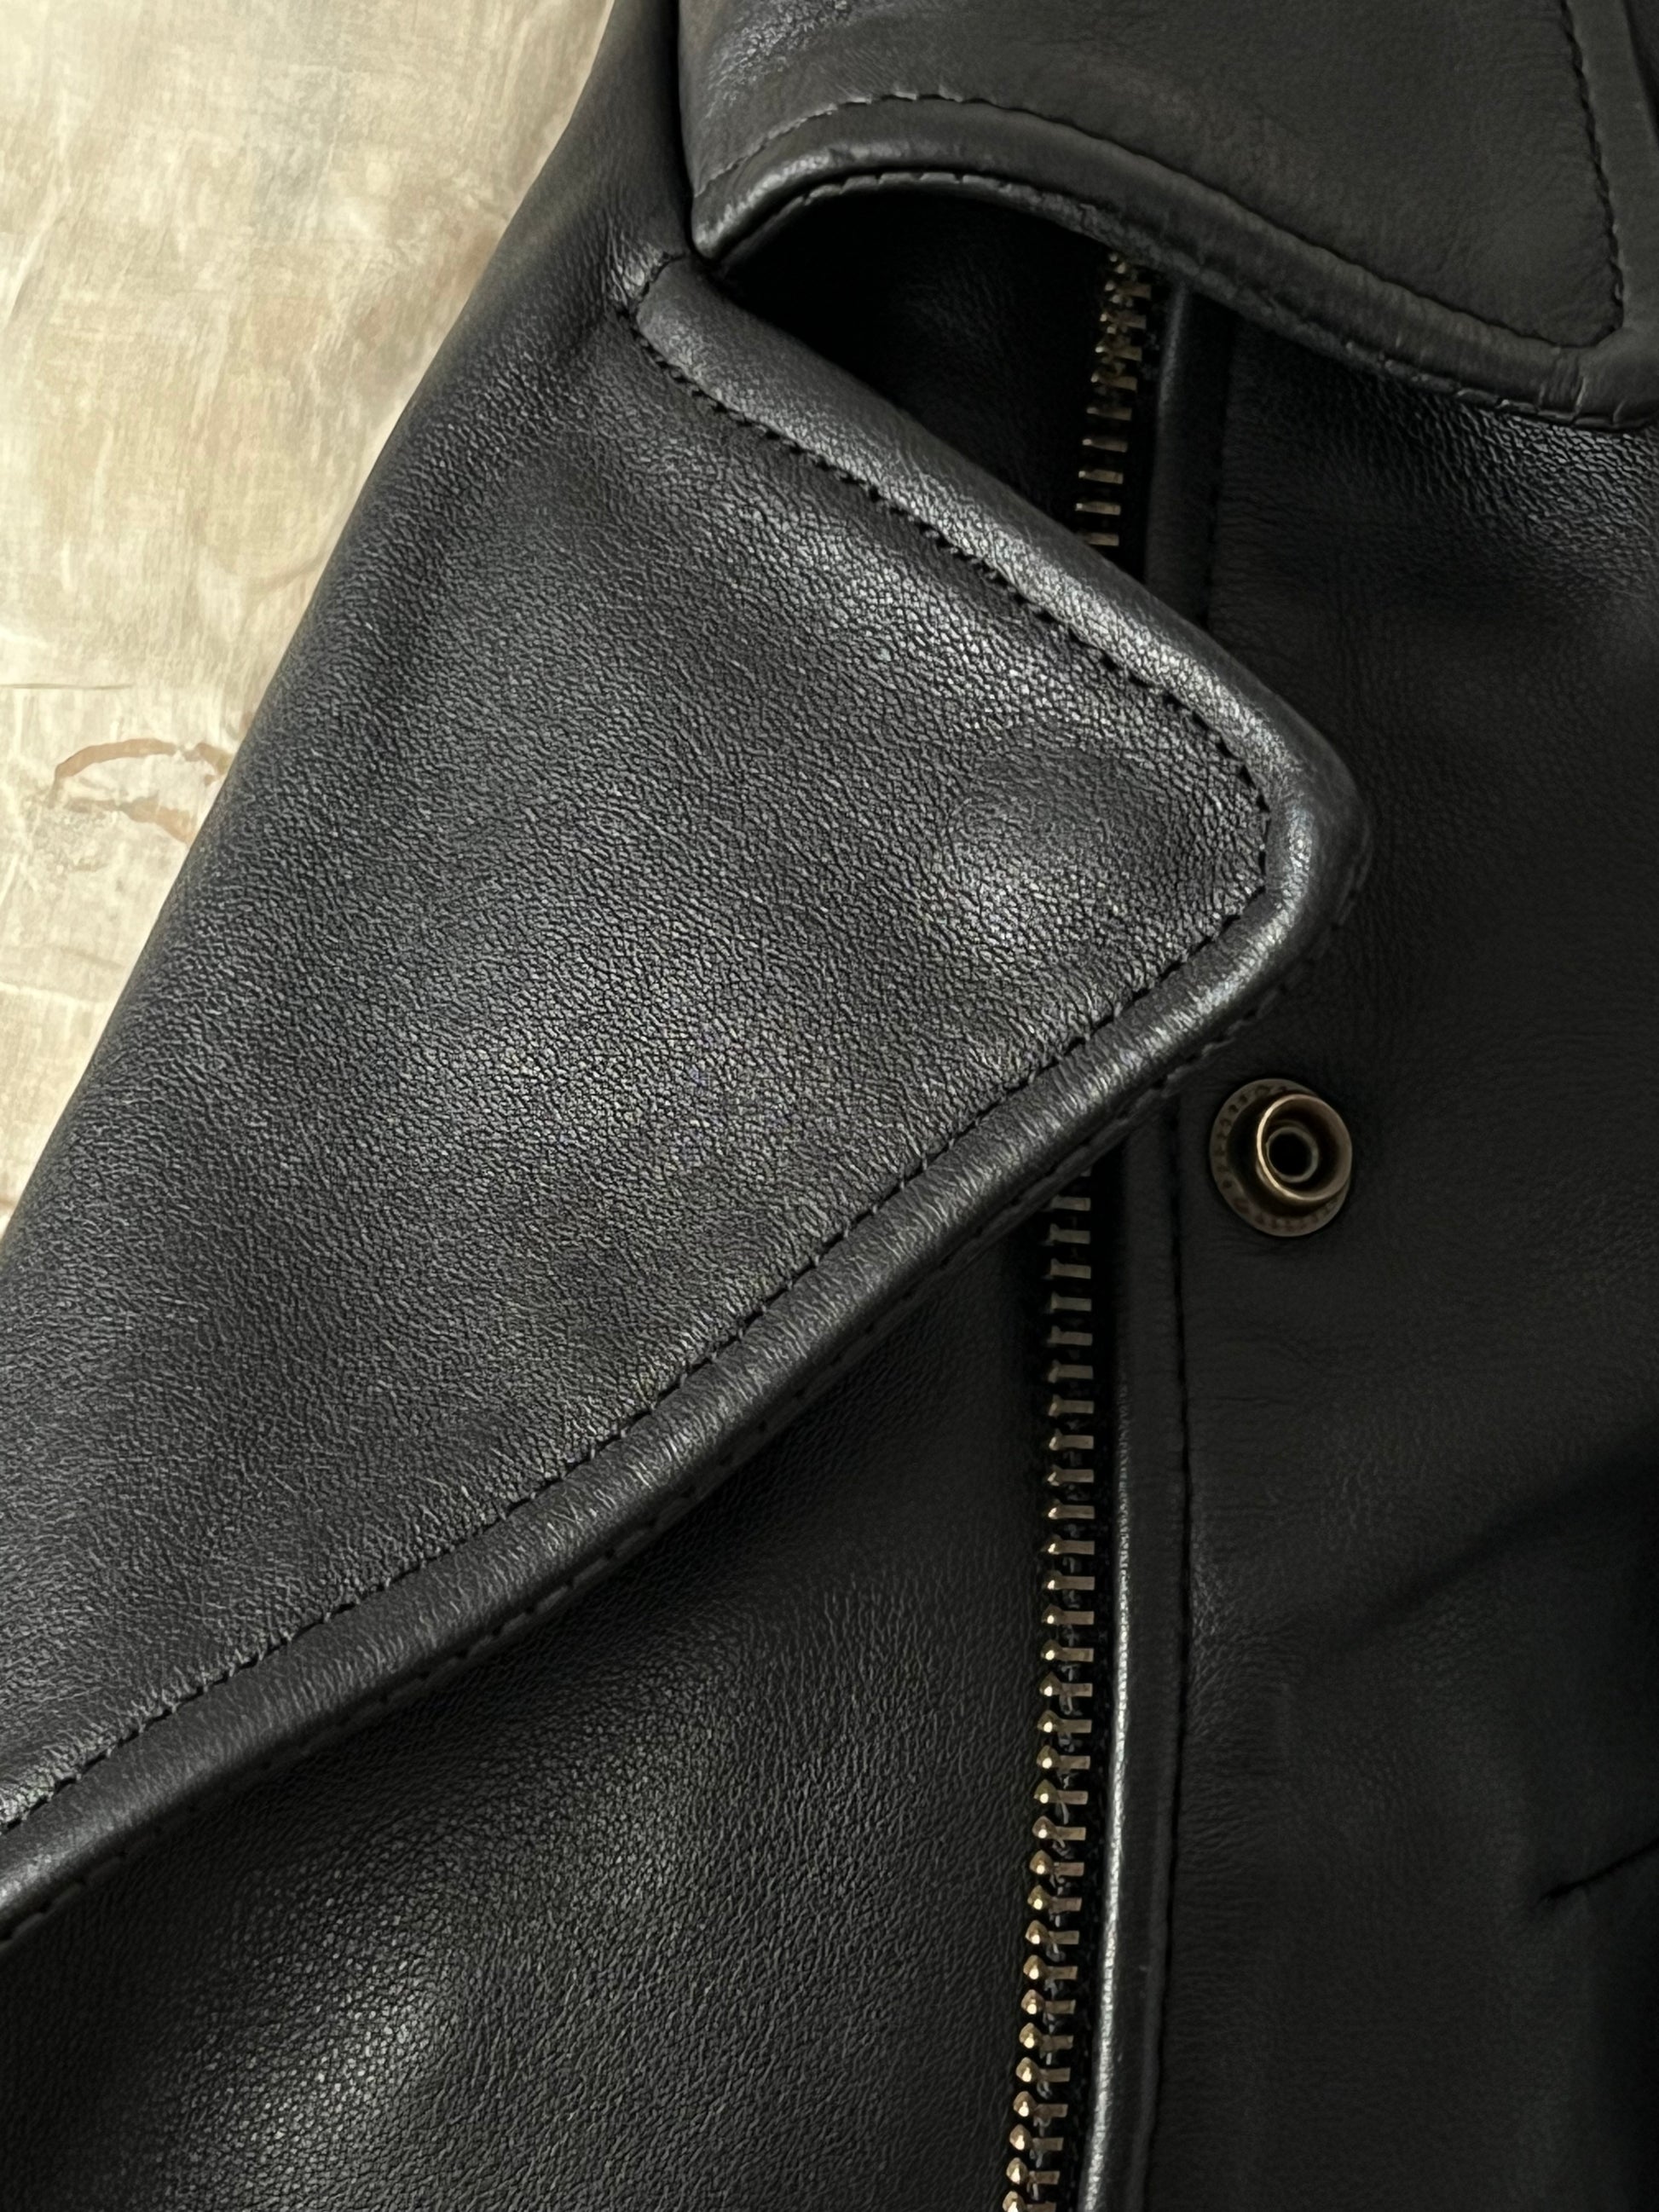 black woman’s leather jacket details